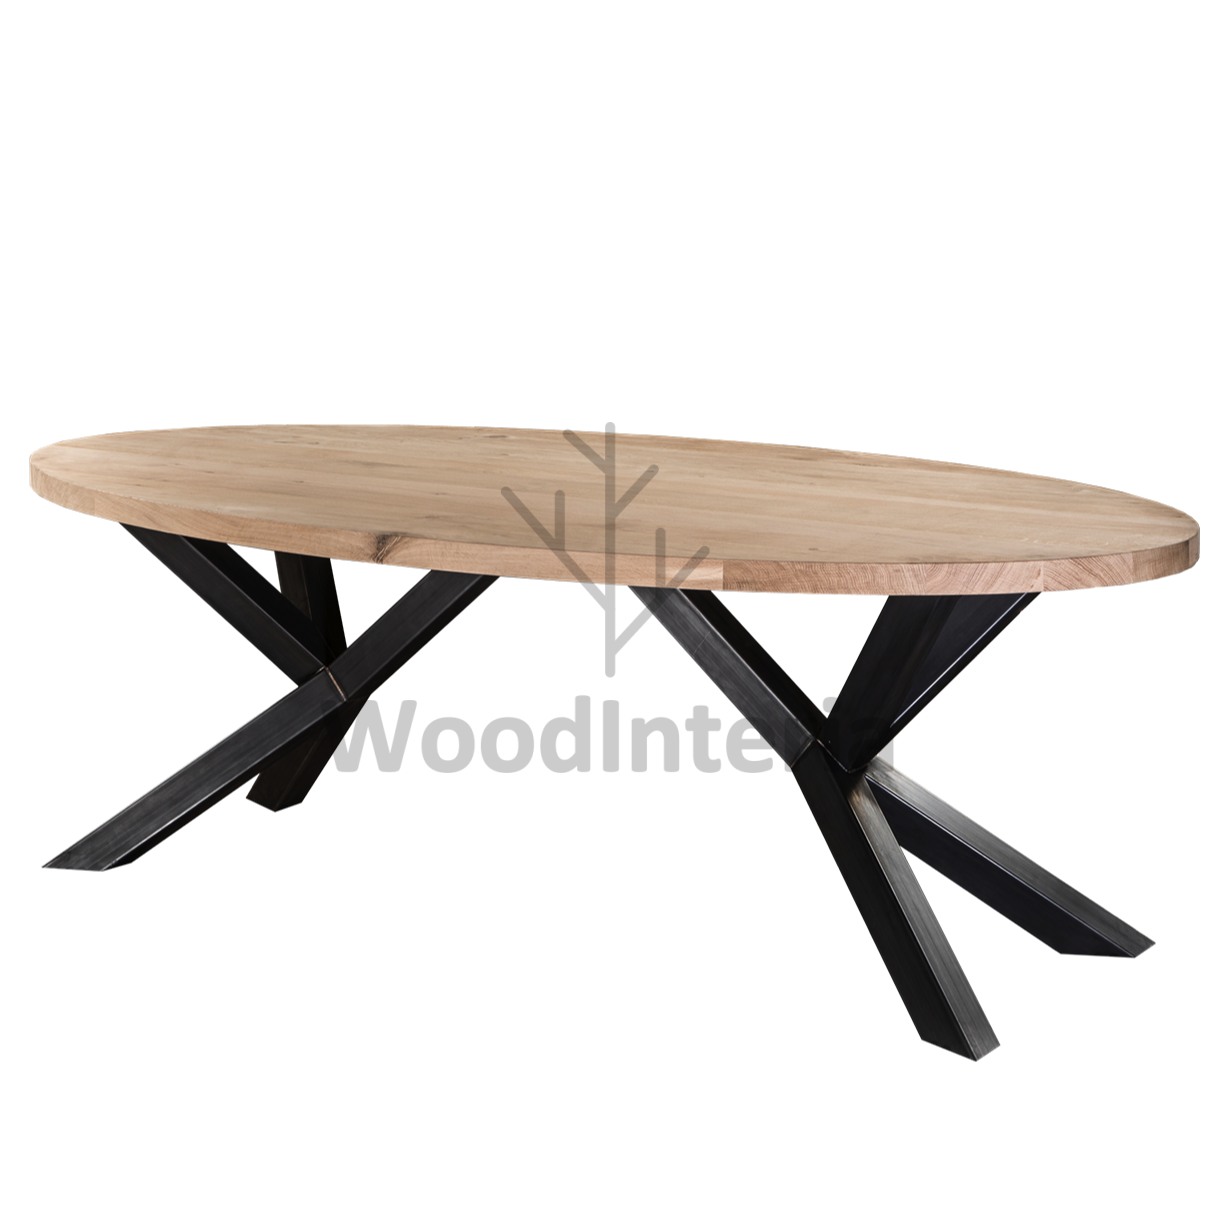 фото обеденный стол double top hedgehog ovaal dinning в стиле лофт эко | WoodInteria